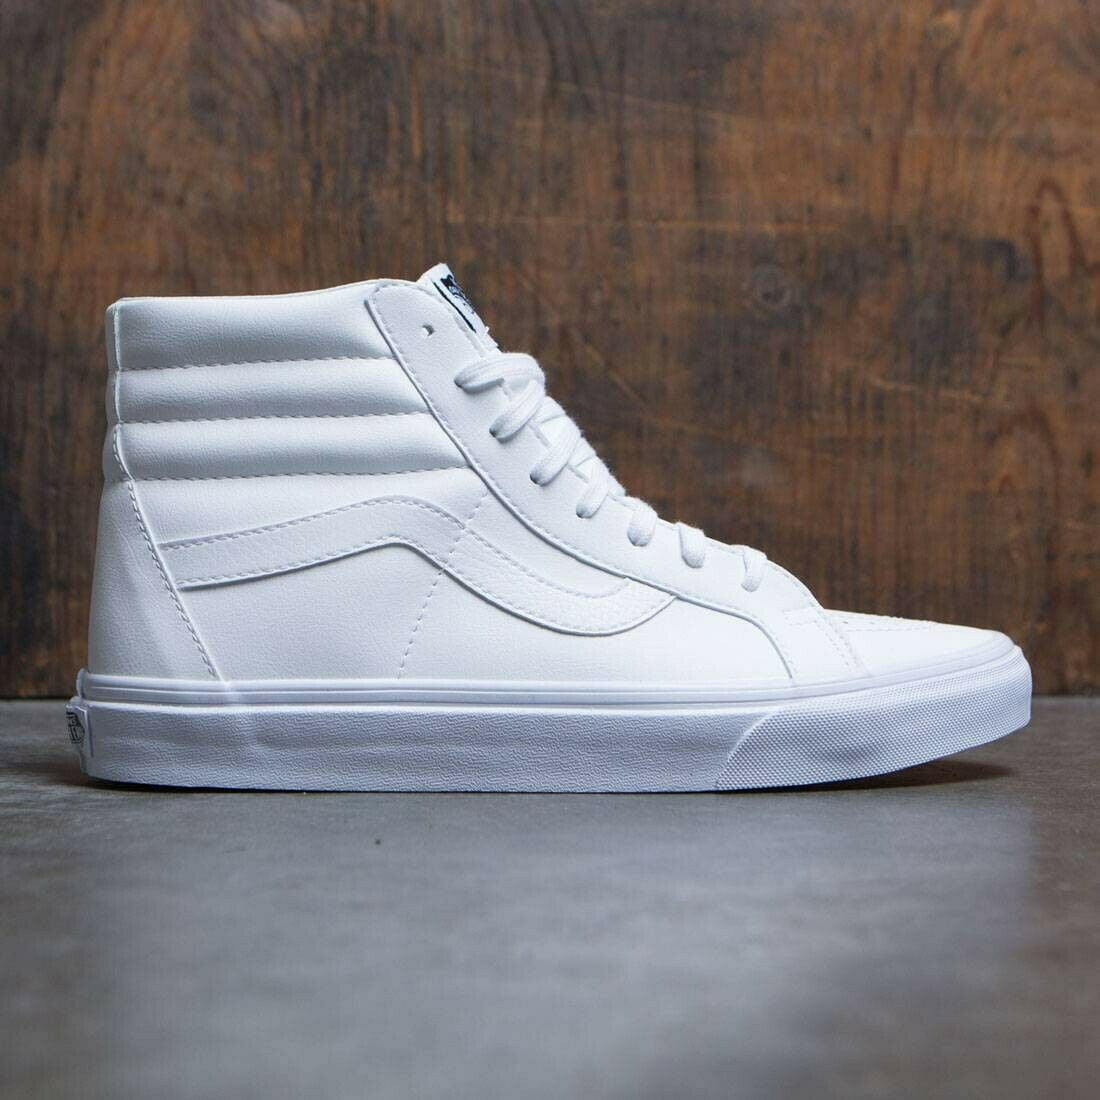 Vans - Vans SK8 Hi Reissue Classic Tumble True White Men's Skate Shoes ...